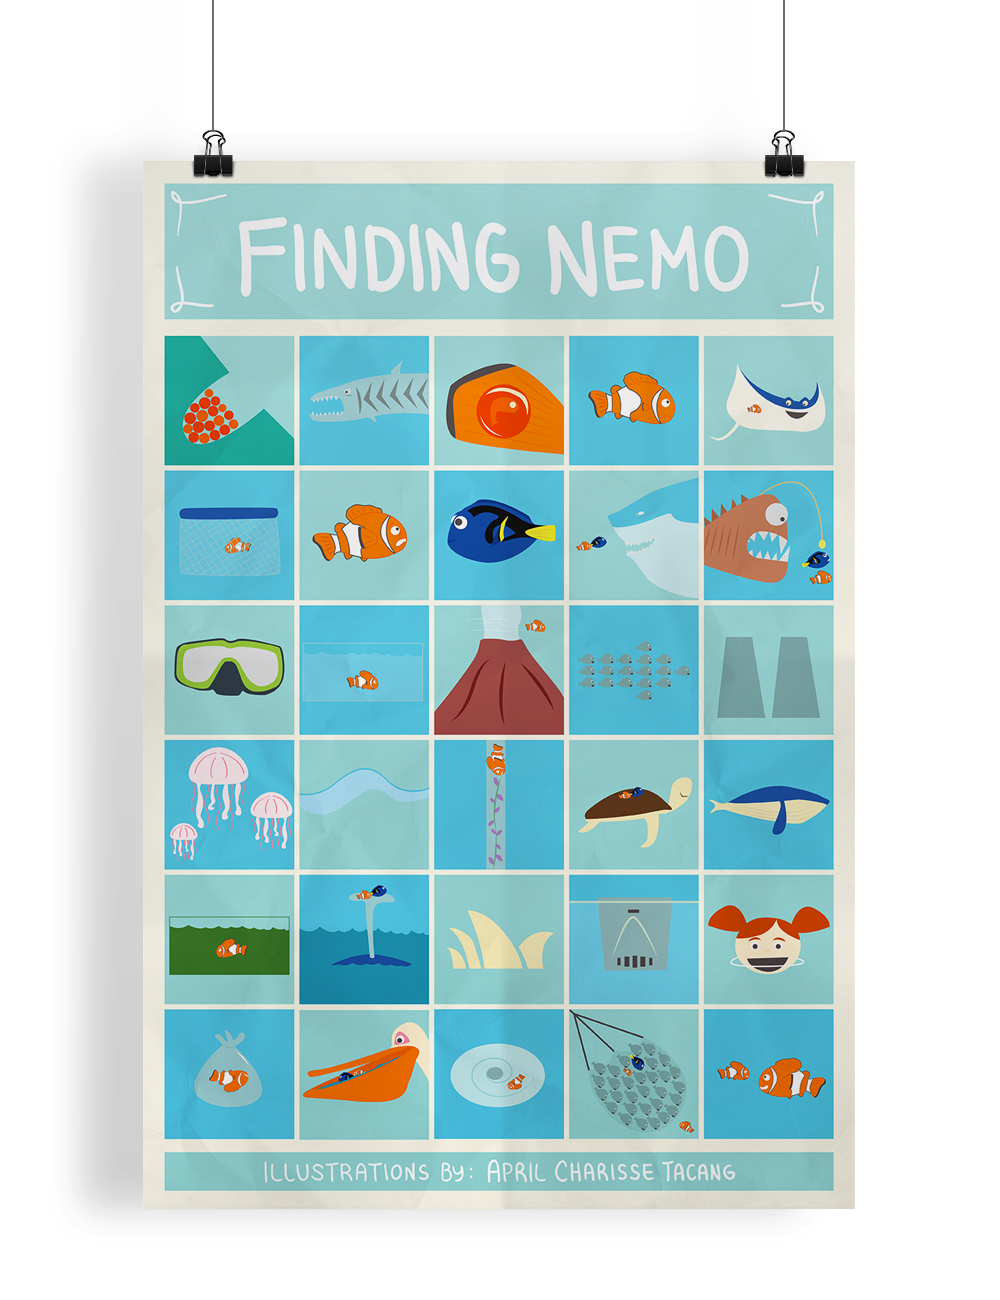 pixar disney finding nemo poster summary dory cute